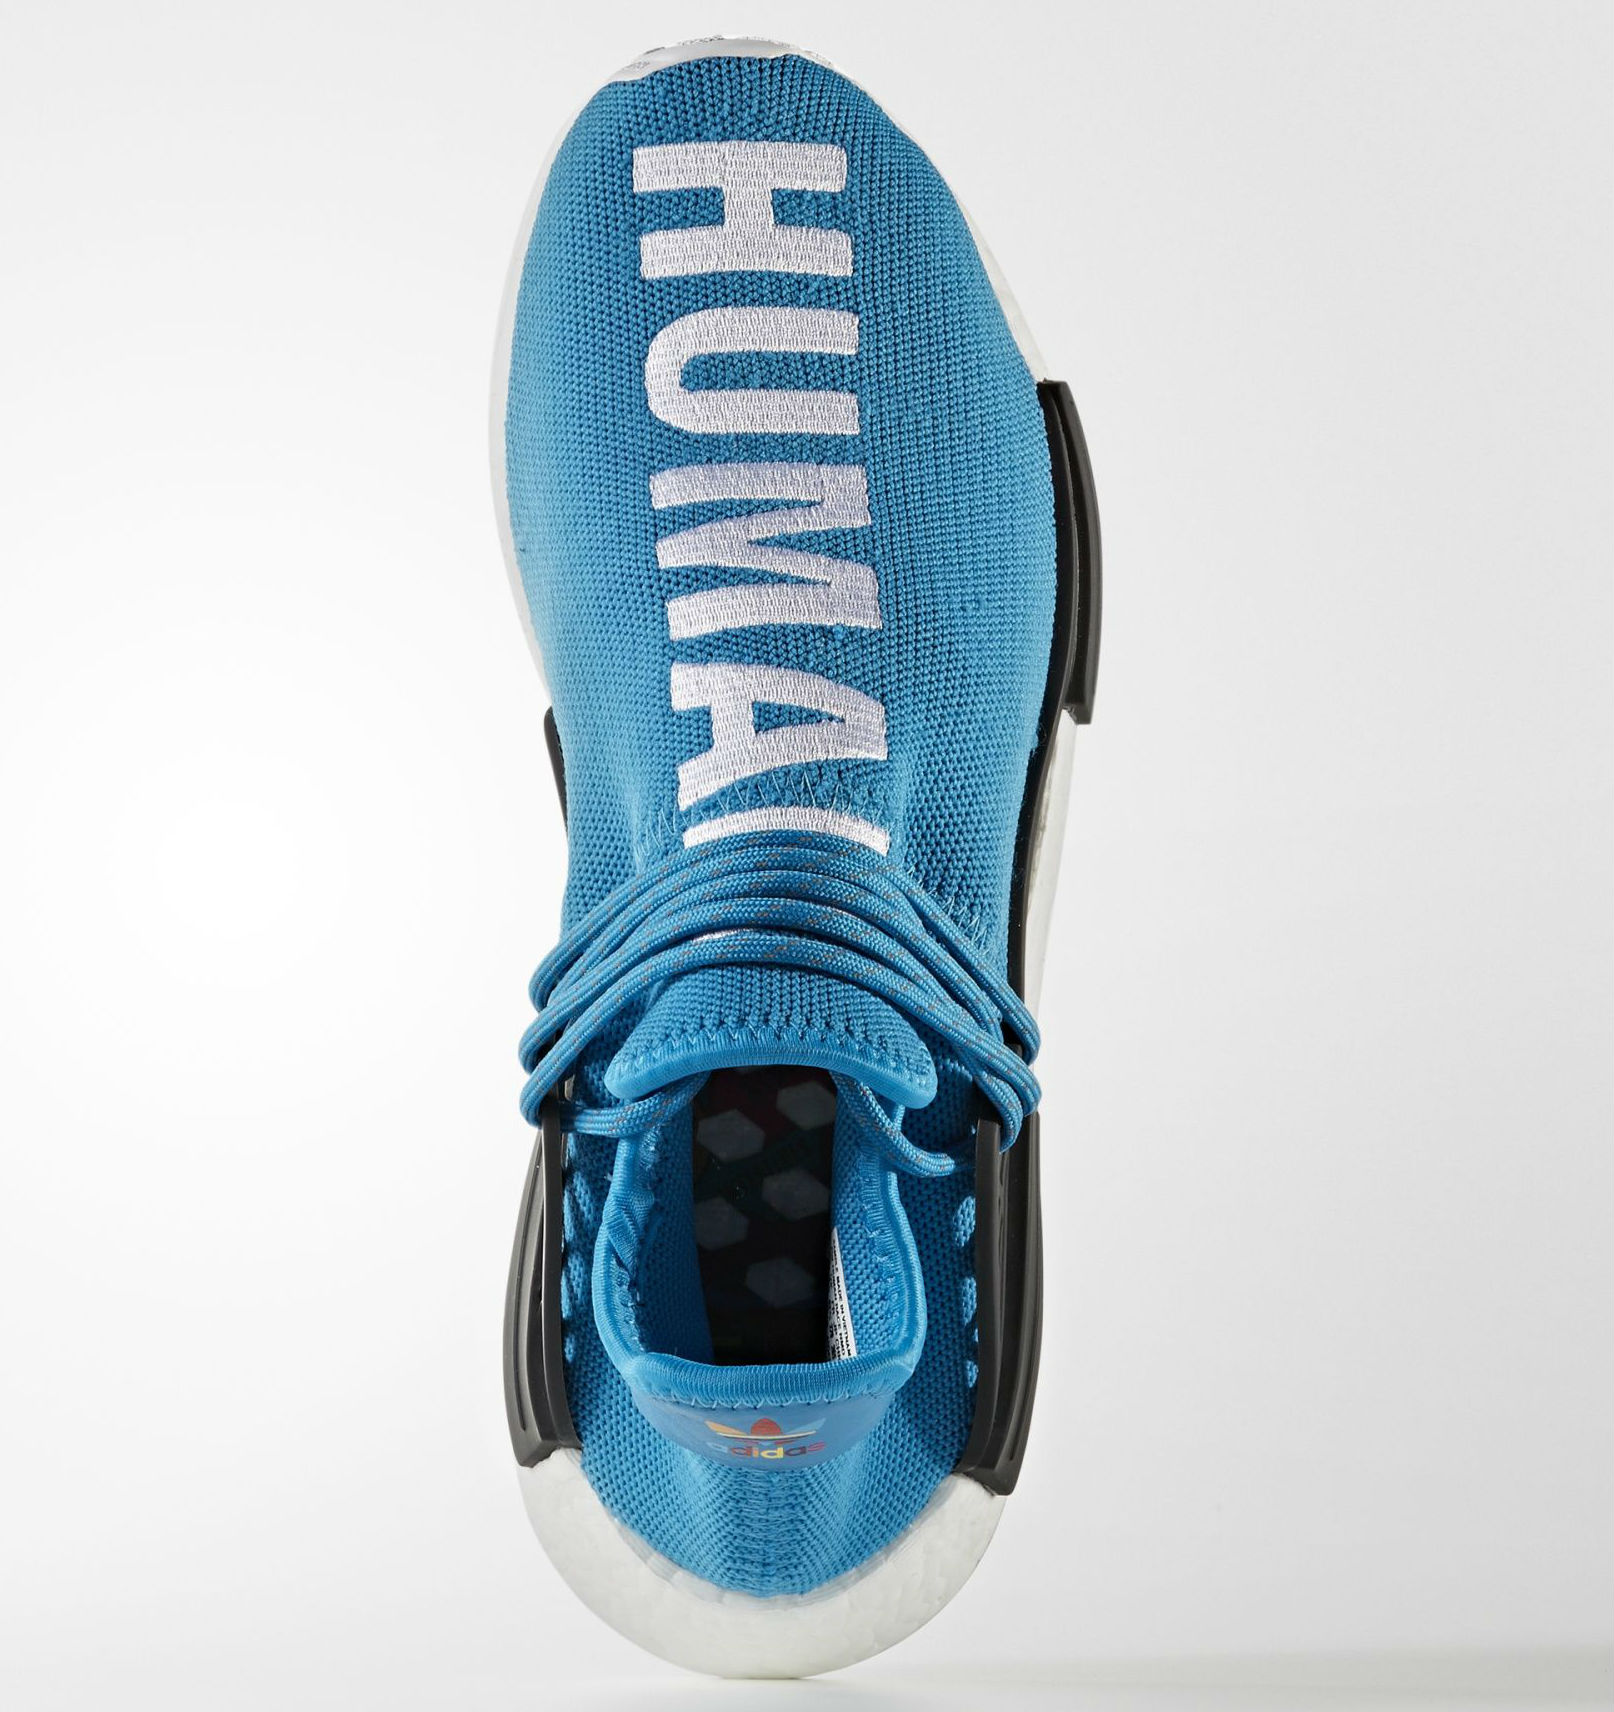 World Famous adidas NMD Human Race Customs - Sneaker Bar Detroit